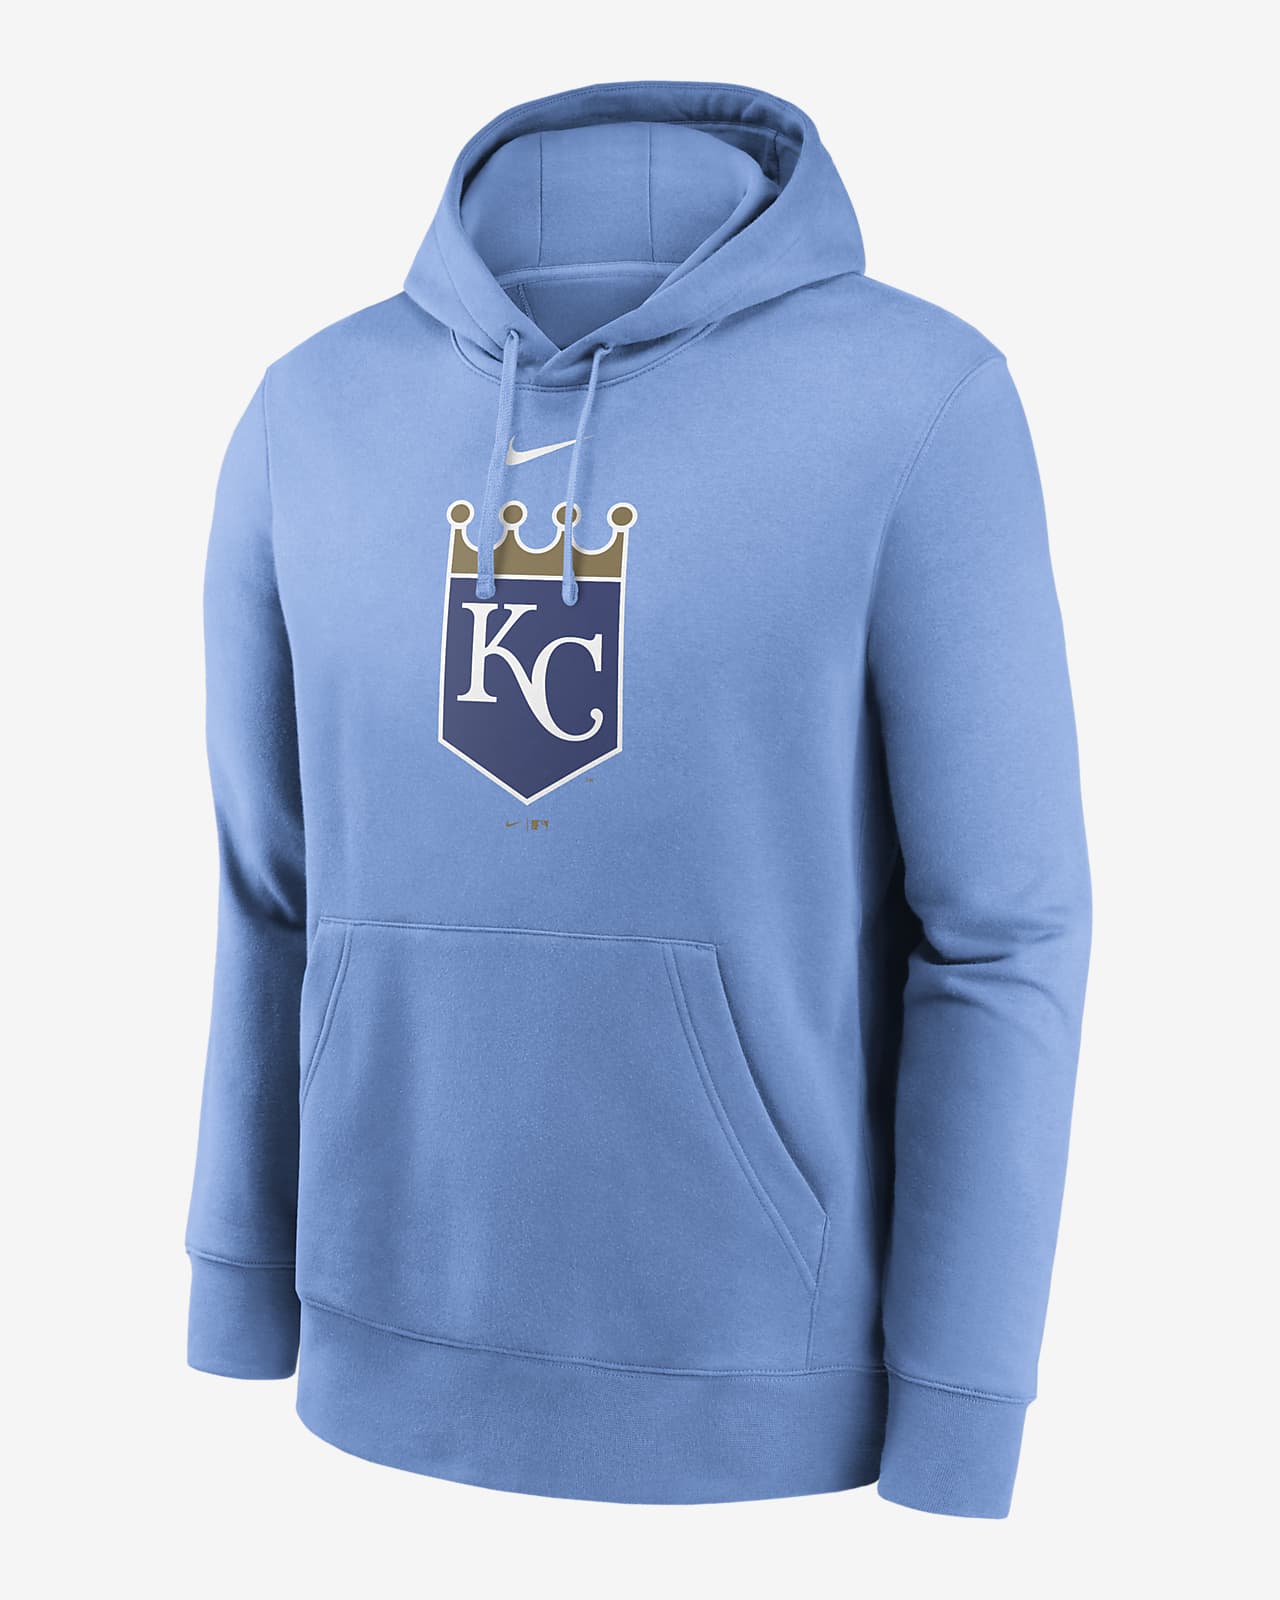 Nike Men's Royal, Light Blue Kansas City Royals Authentic Collection Pregame Performance Raglan Pullover Sweatshirt